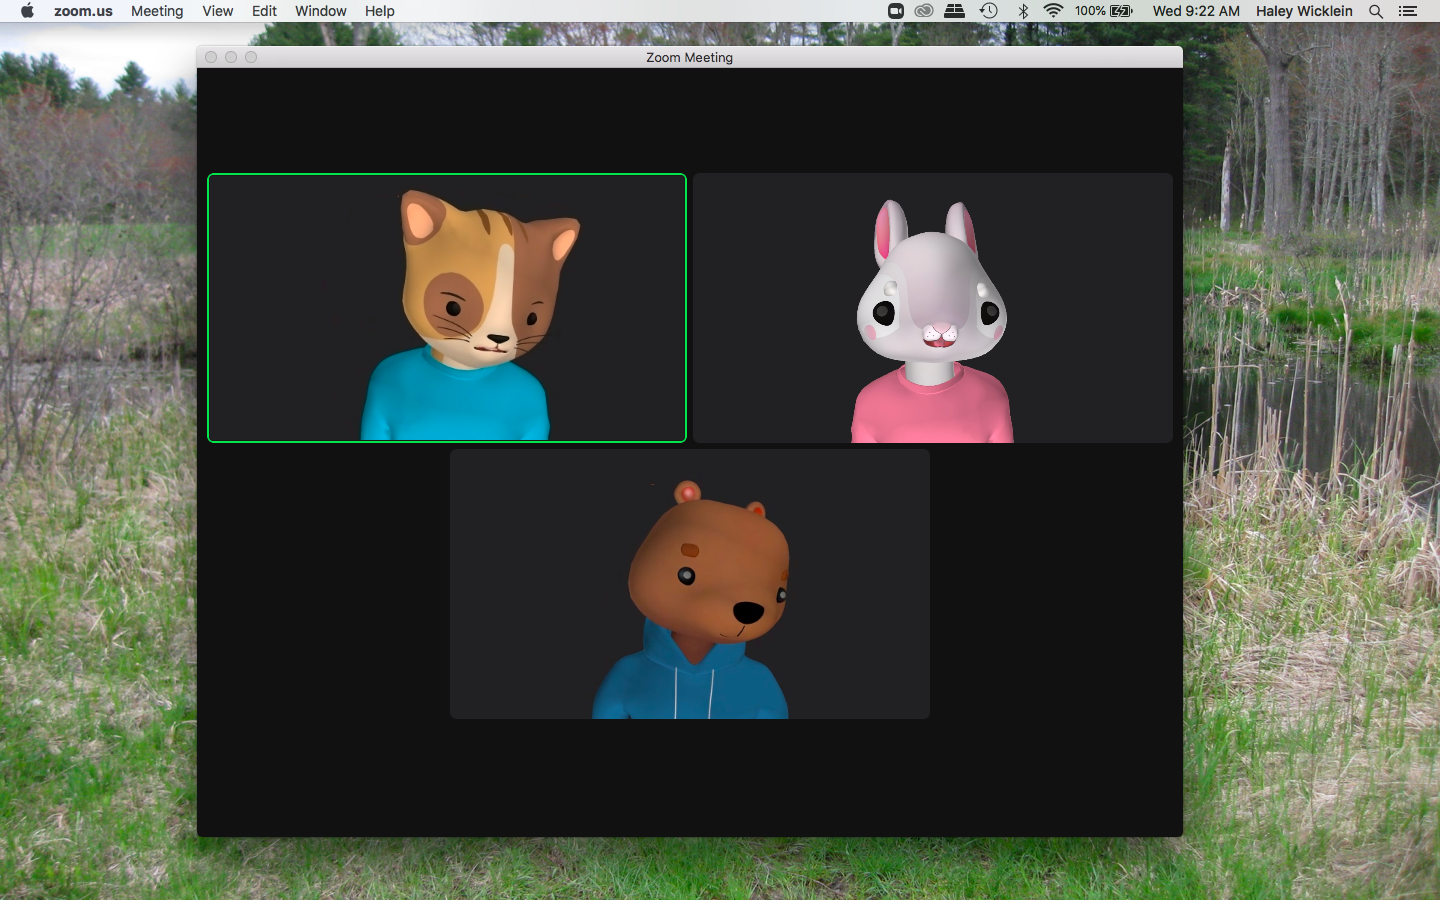 A screenshot of a desktop screen with three cartoon avatars: a bunny, bear and cat. 